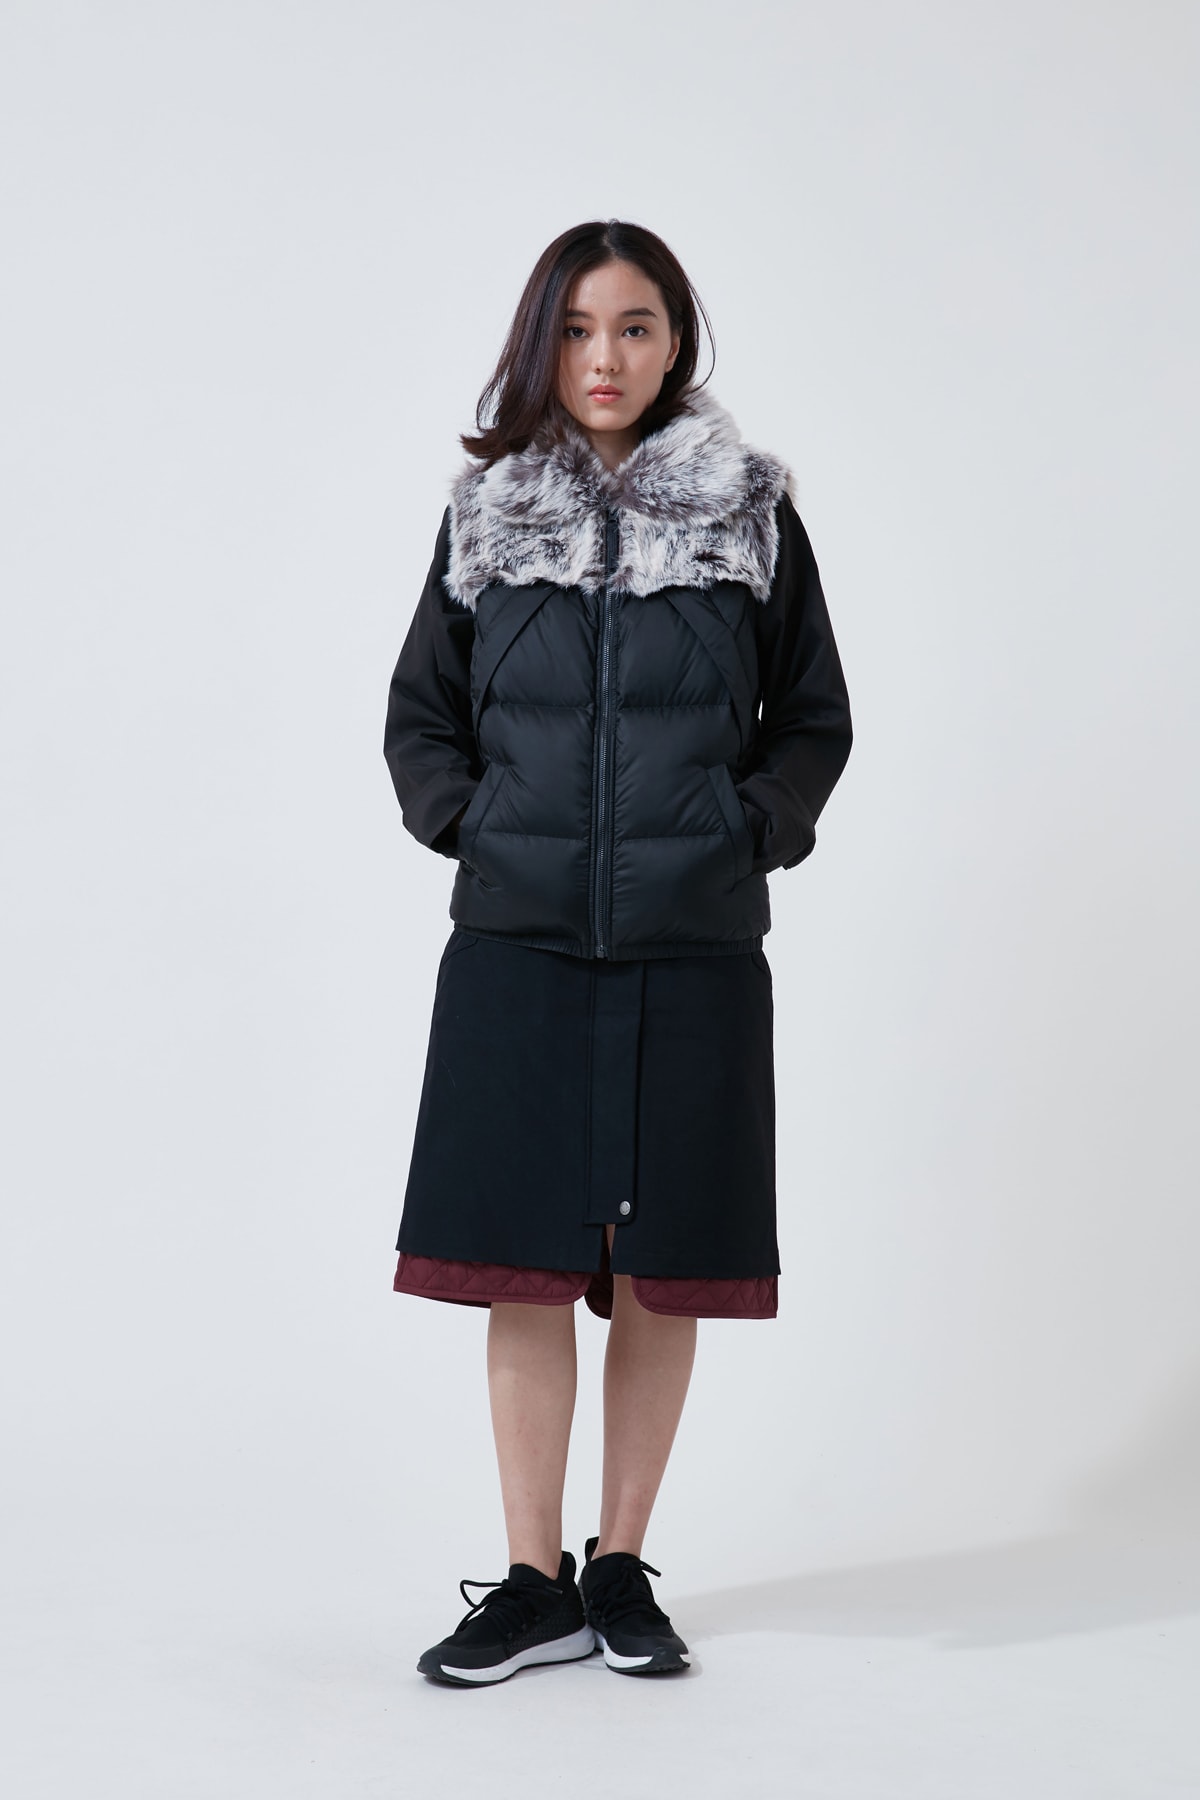 The North Face Urban Exploration Black Series Fall Winter 2018 Jacket Skirt Black